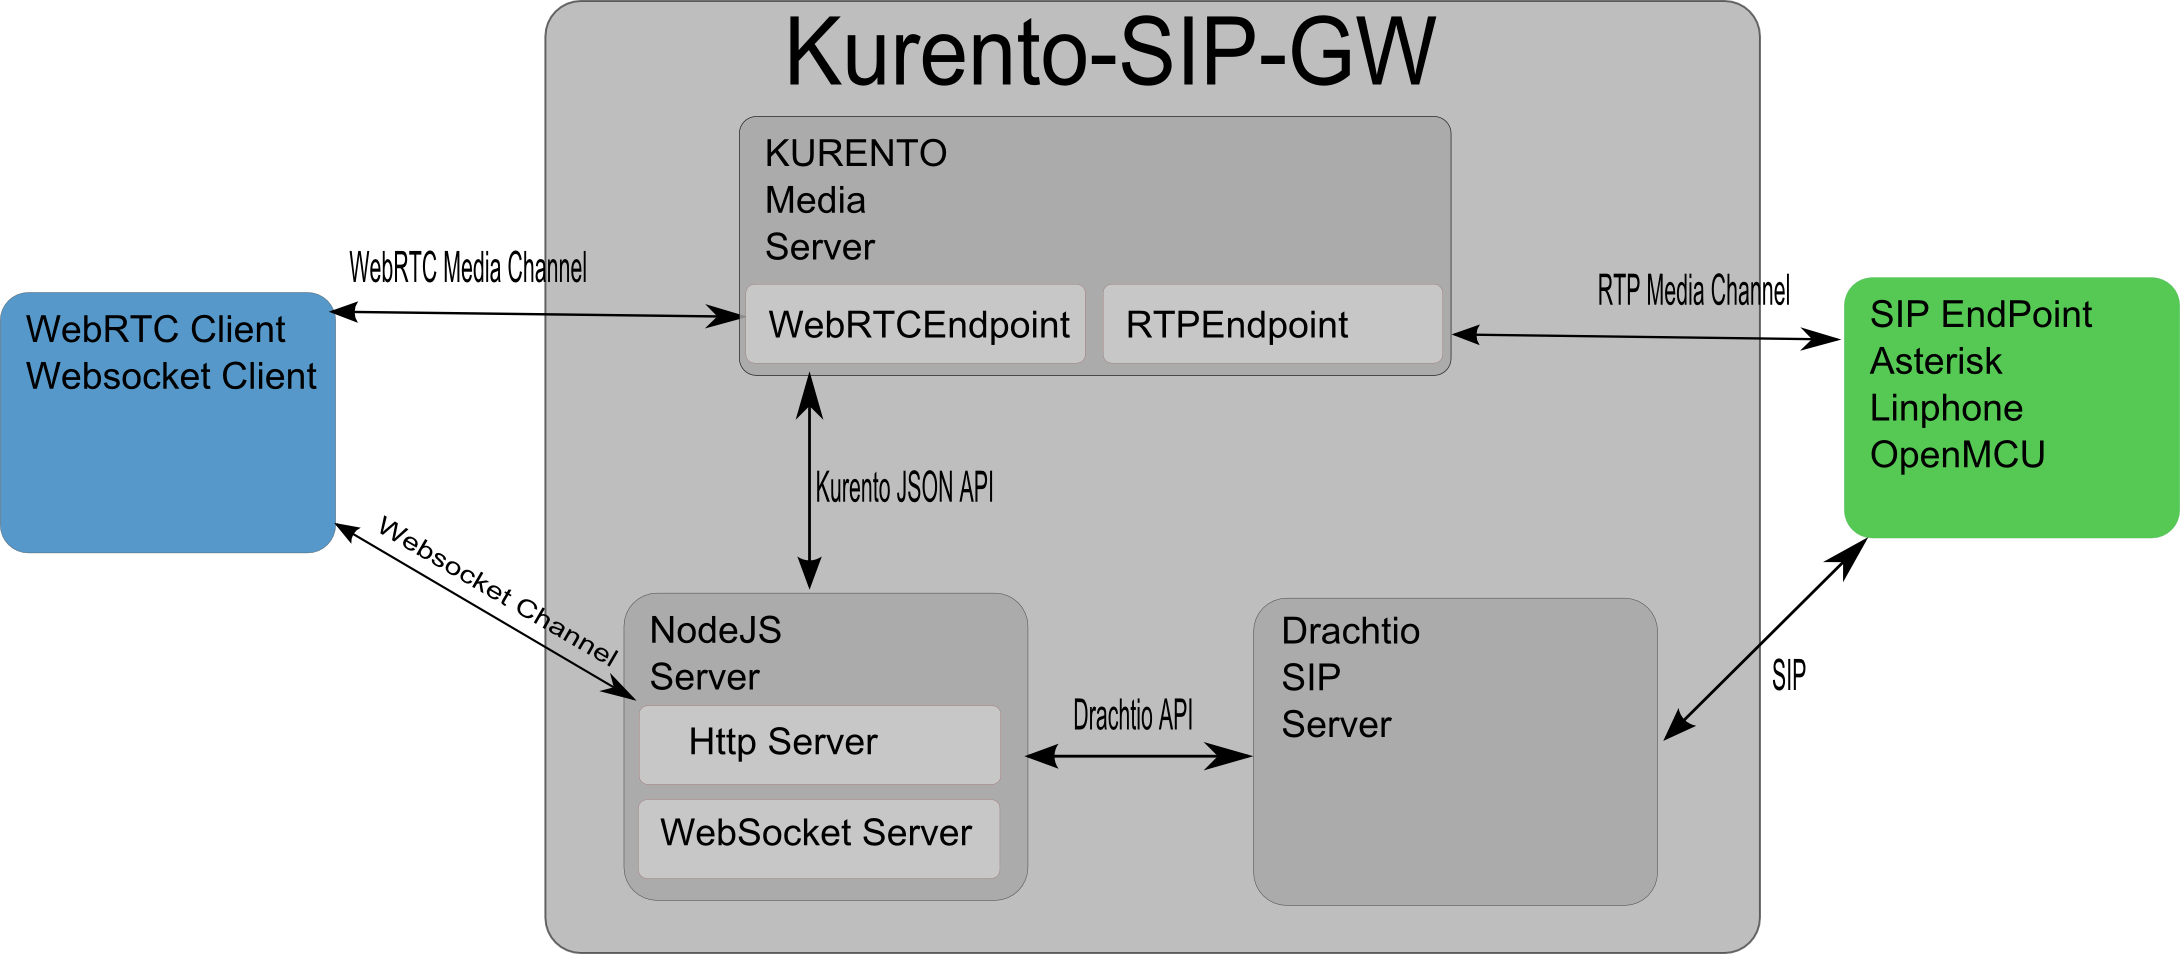 Kurento-SIP-GW architecture